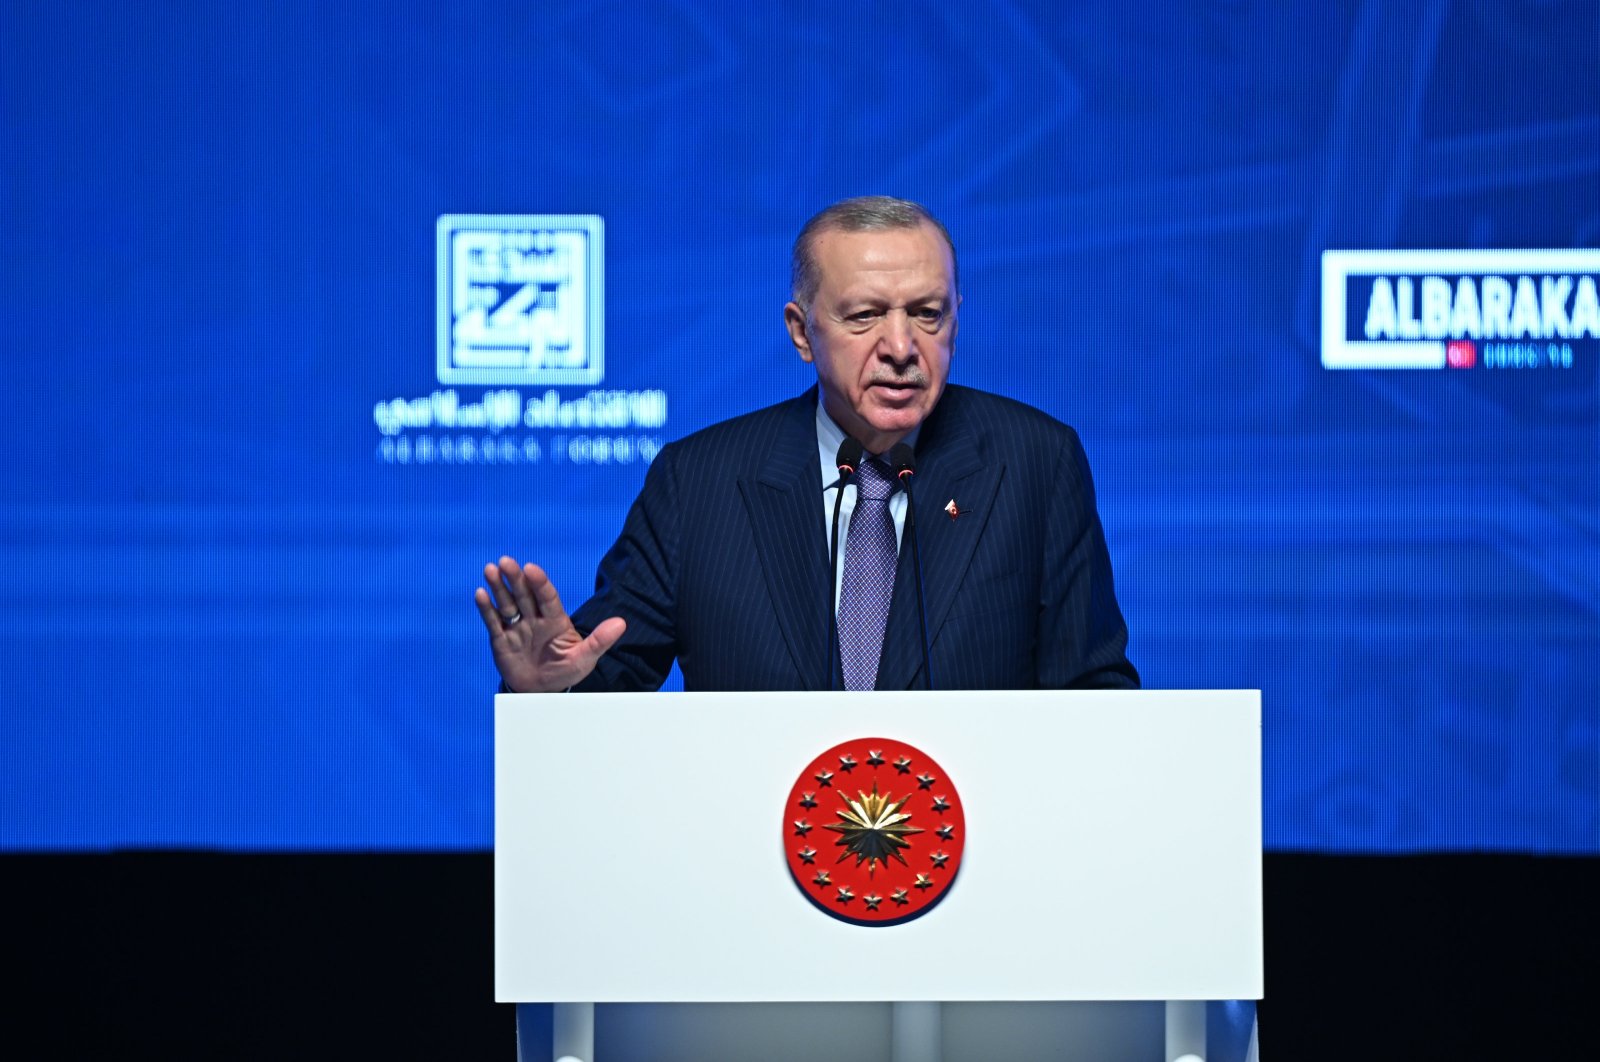 Erdoğan criticizes global inequities, advocates for Islamic finance